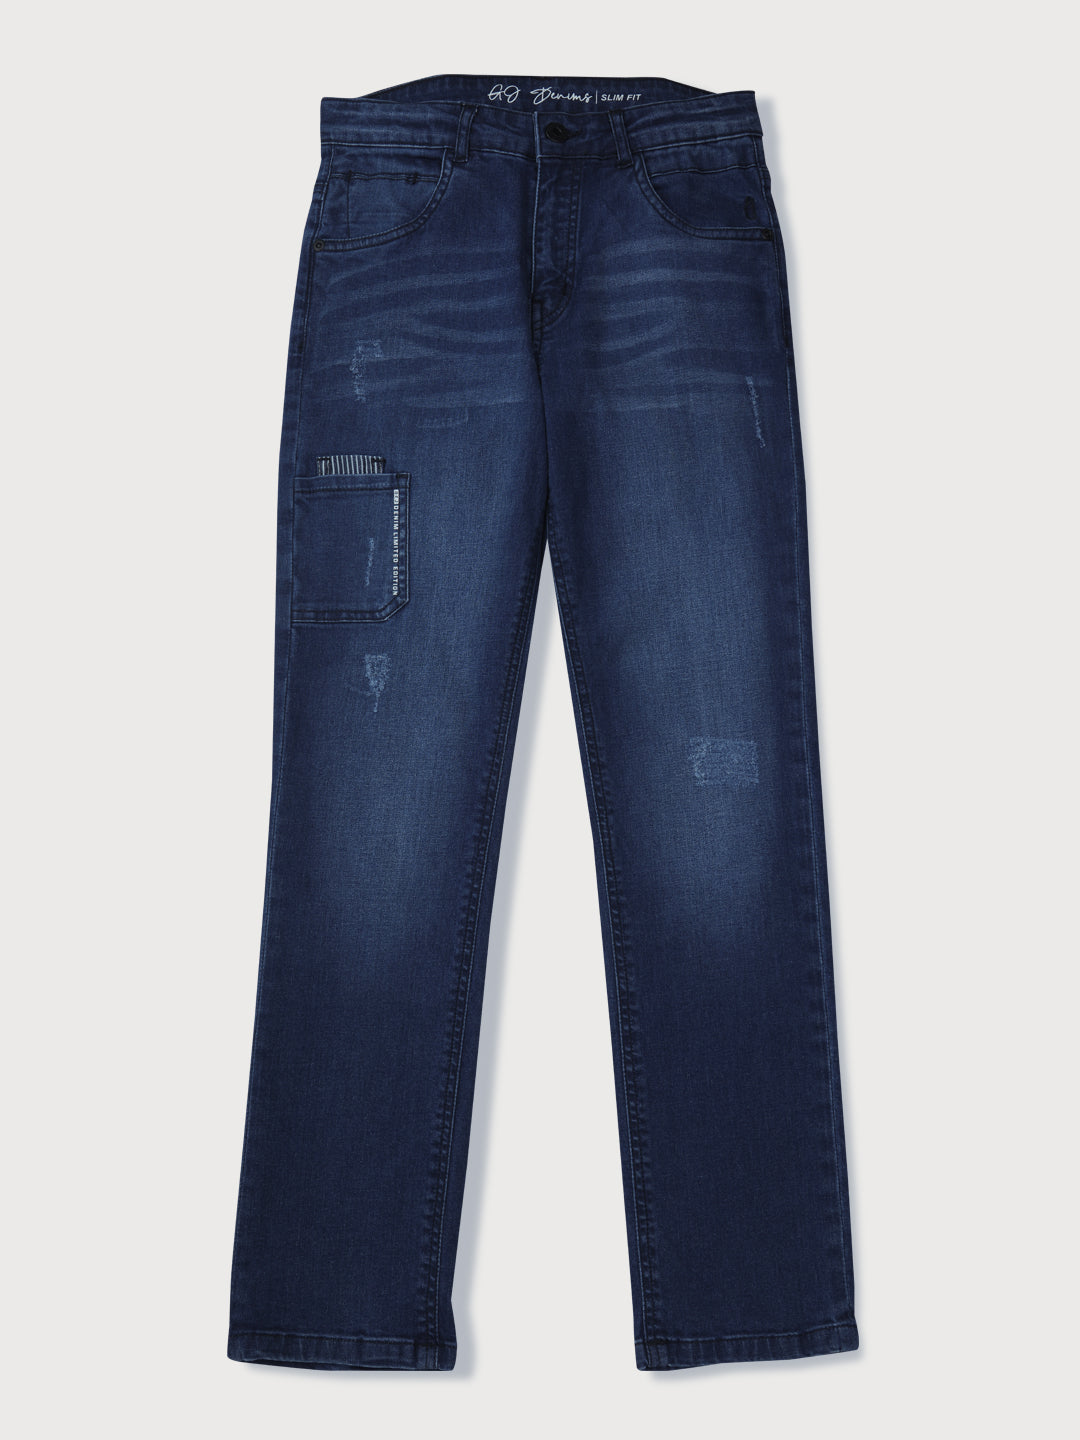 Boys Navy Blue Solid Denim Jeans